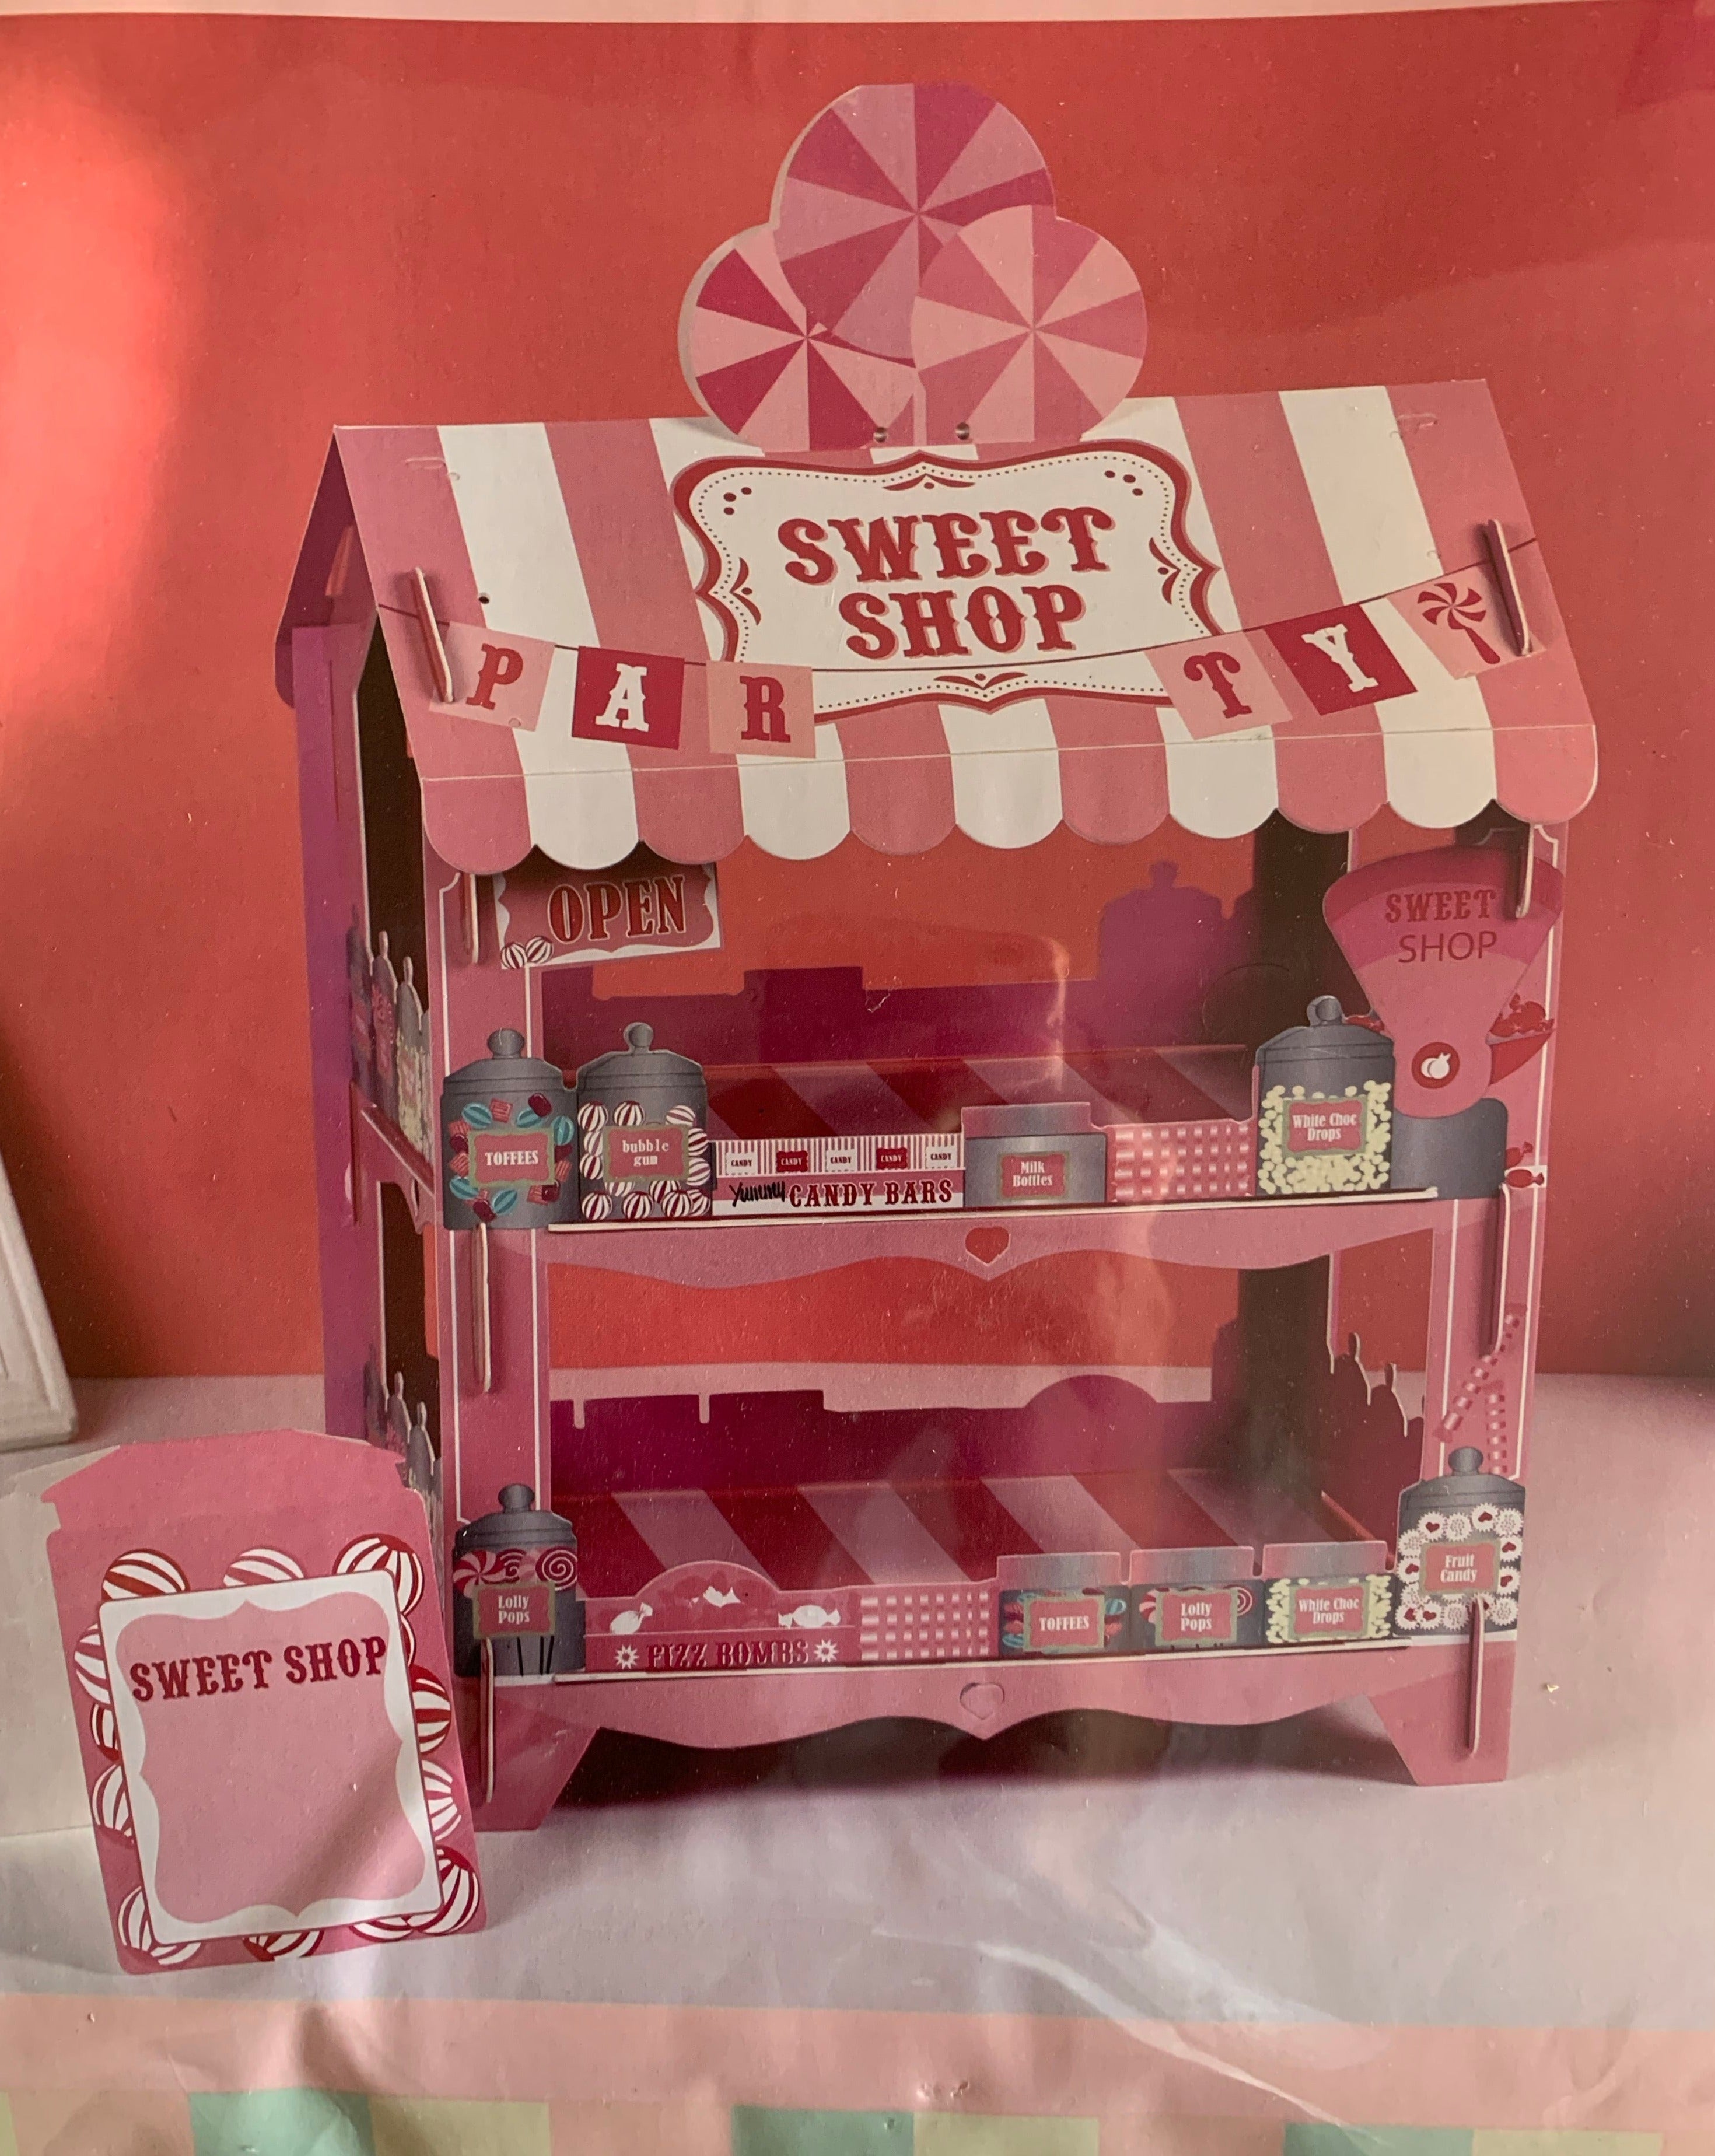 Sweet shop cupcake stand